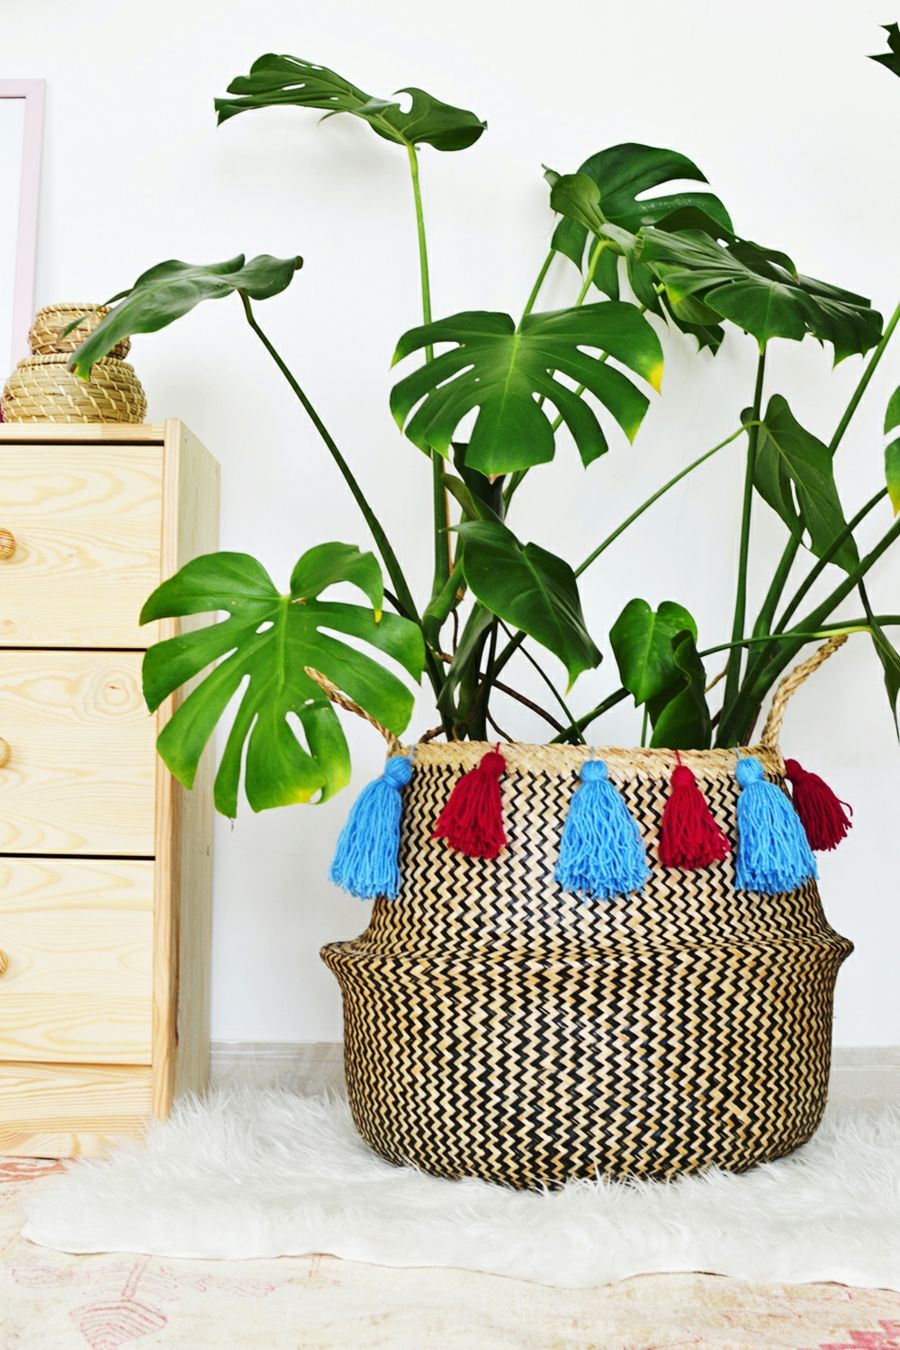 Delicious window leaf planter wicker basket DIY decoration idea